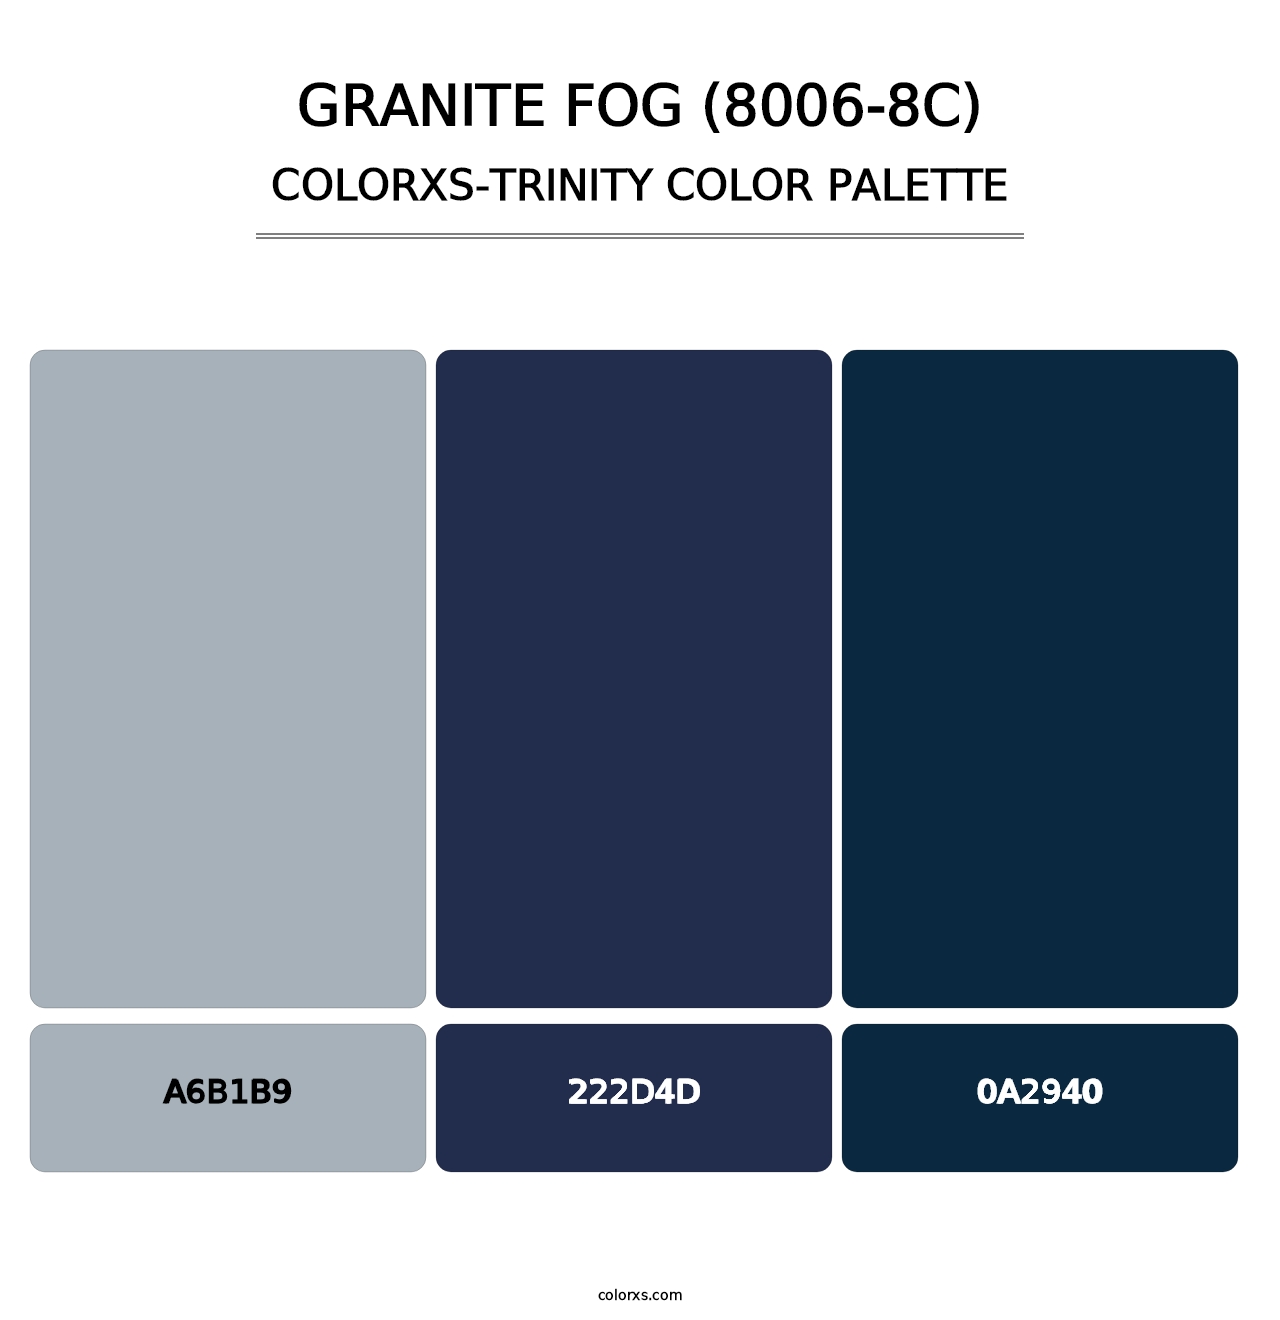 Granite Fog (8006-8C) - Colorxs Trinity Palette